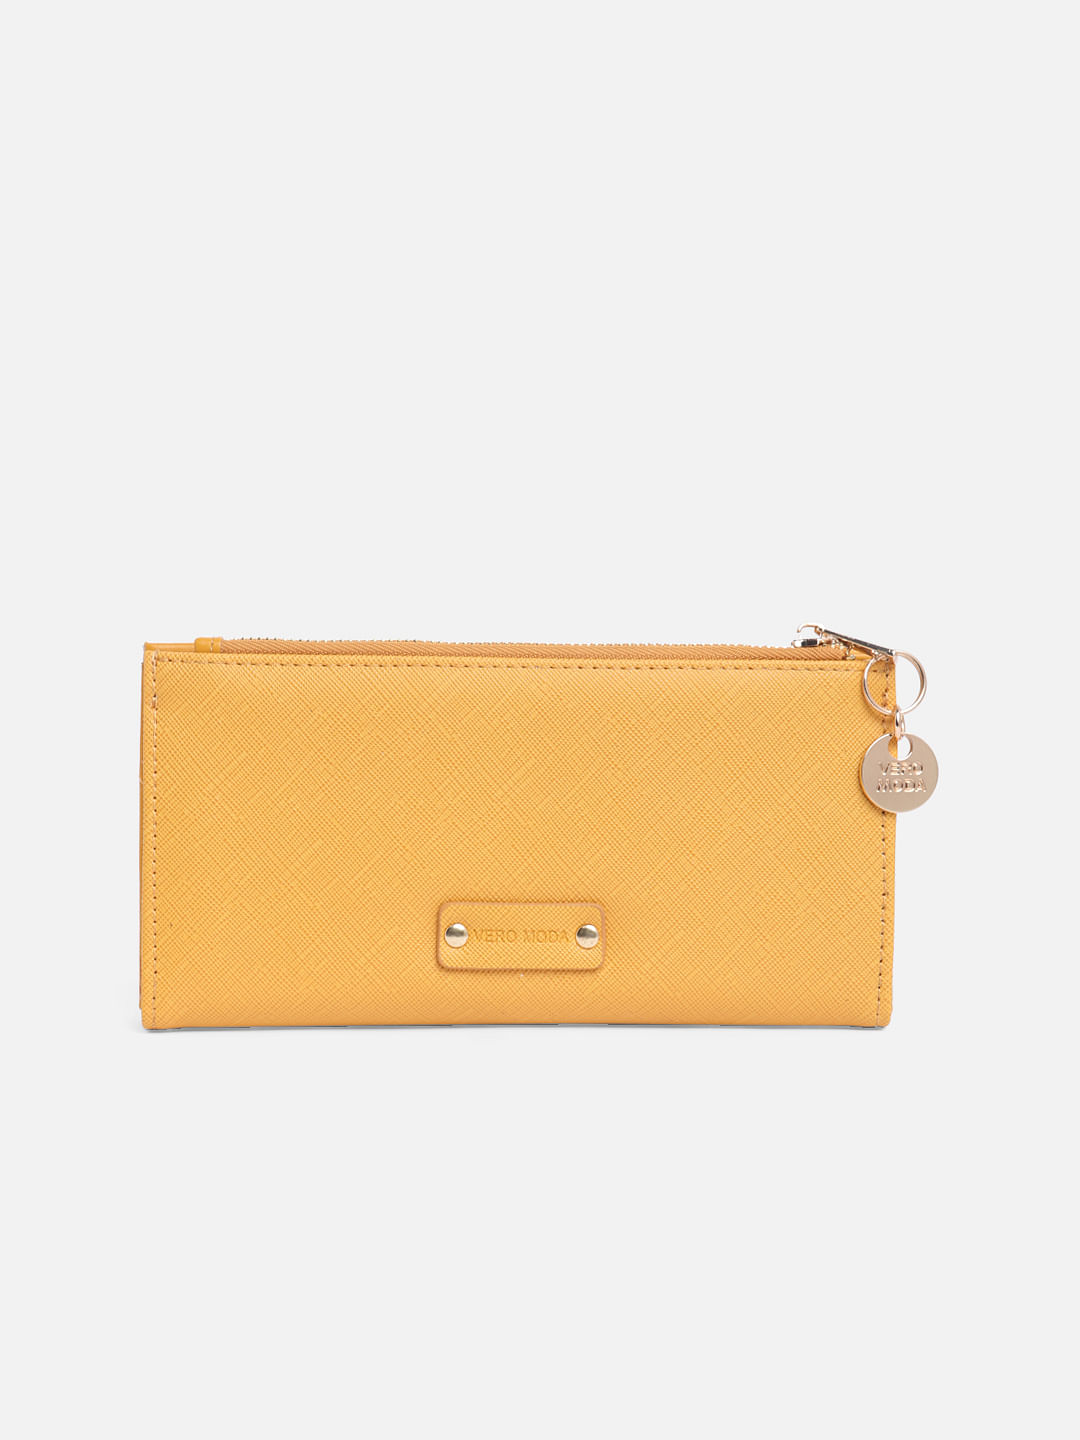 Kate Spade Yellow Leather Zip Around Wallet Kate Spade | TLC